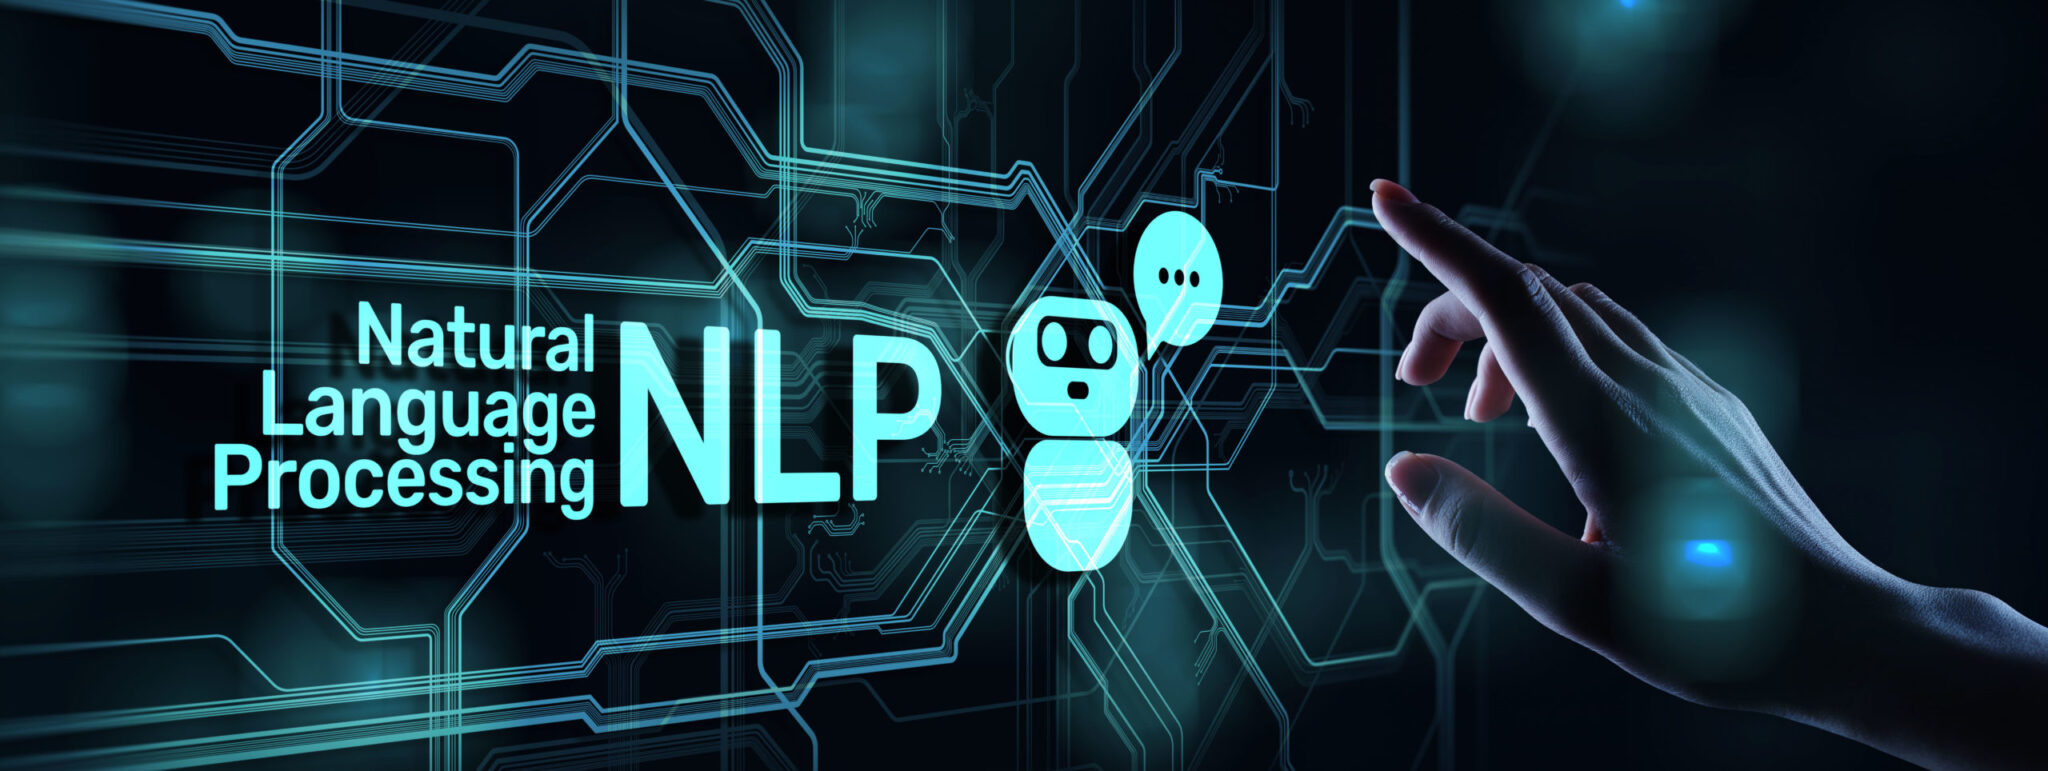  Natural Language Processing (NLP)